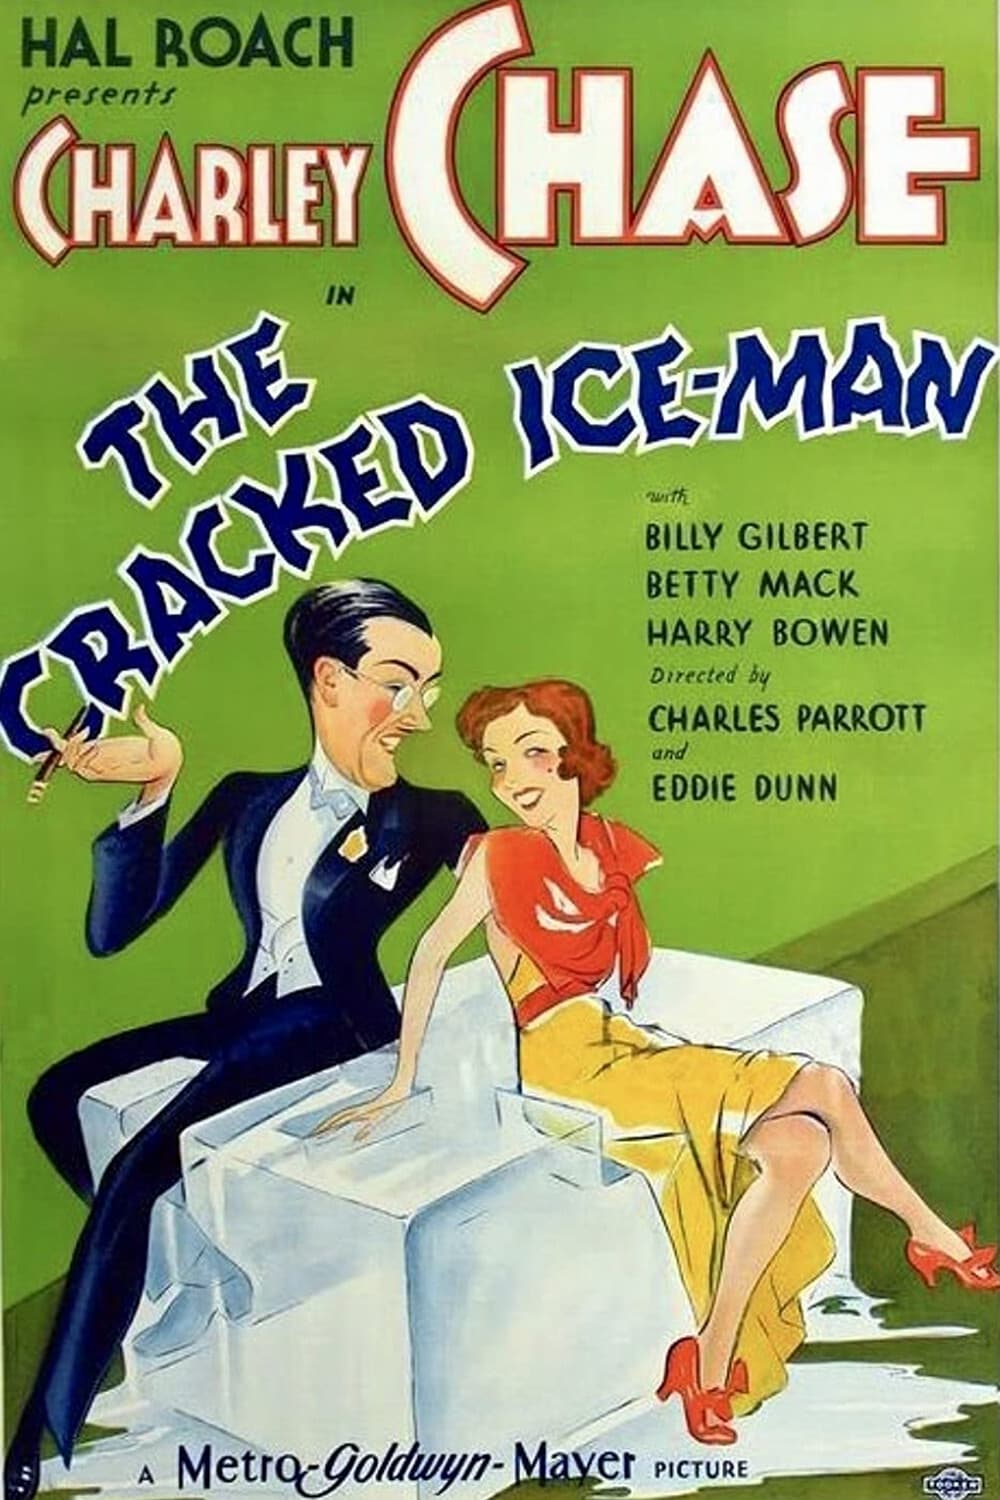 The Cracked Ice Man